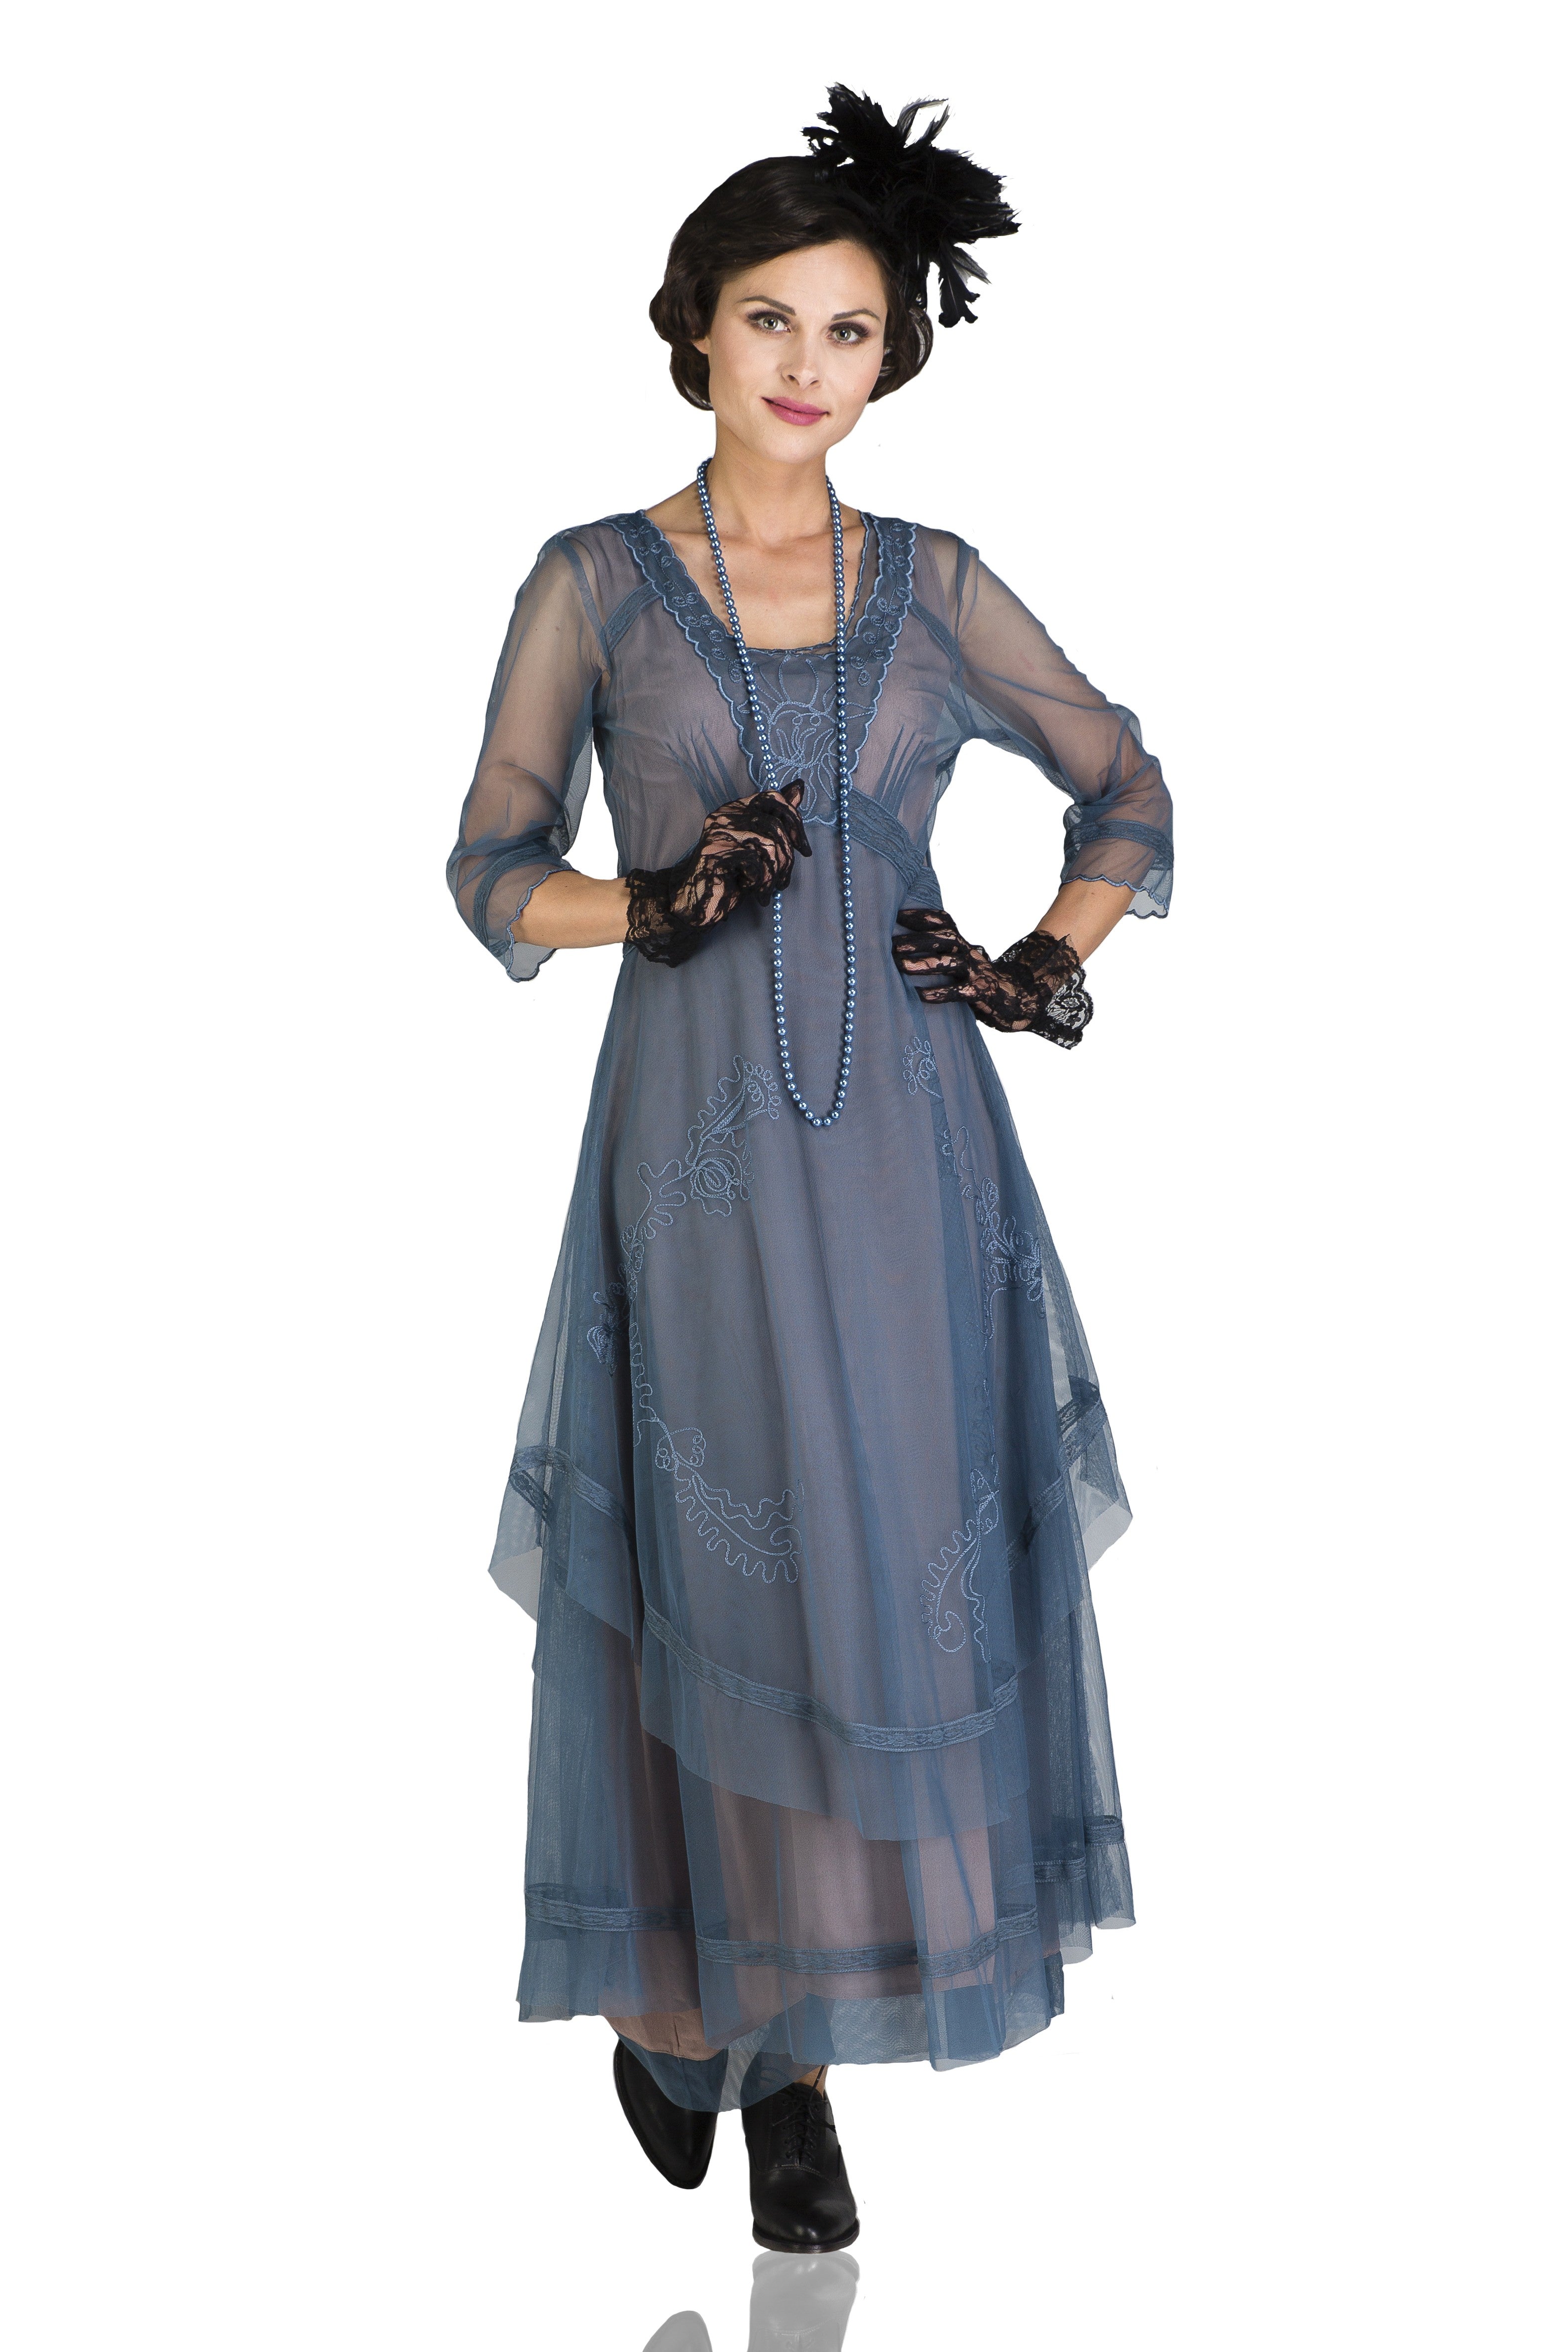 Edwardian Ladies Clothing – 1900, 1910s, Titanic Era Mary Darling Dress in Azure by Nataya $265.00 AT vintagedancer.com